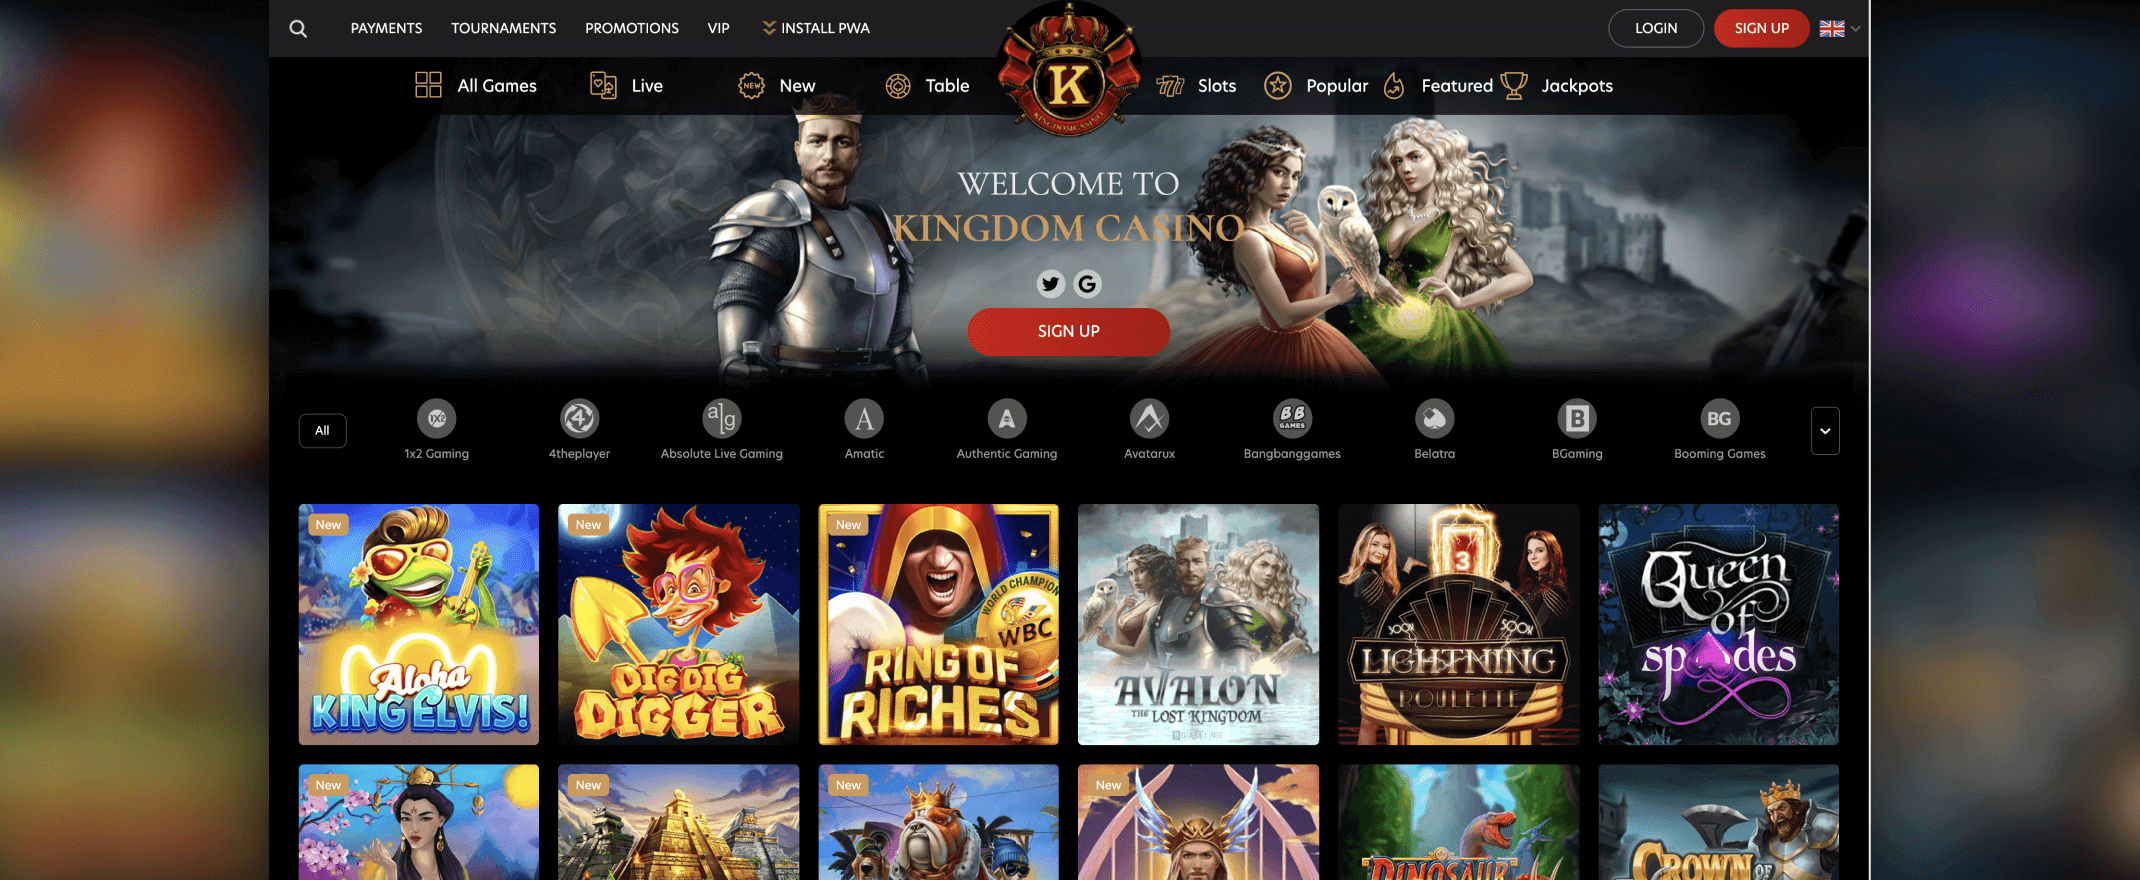 Kingdom casino homepage screenshot